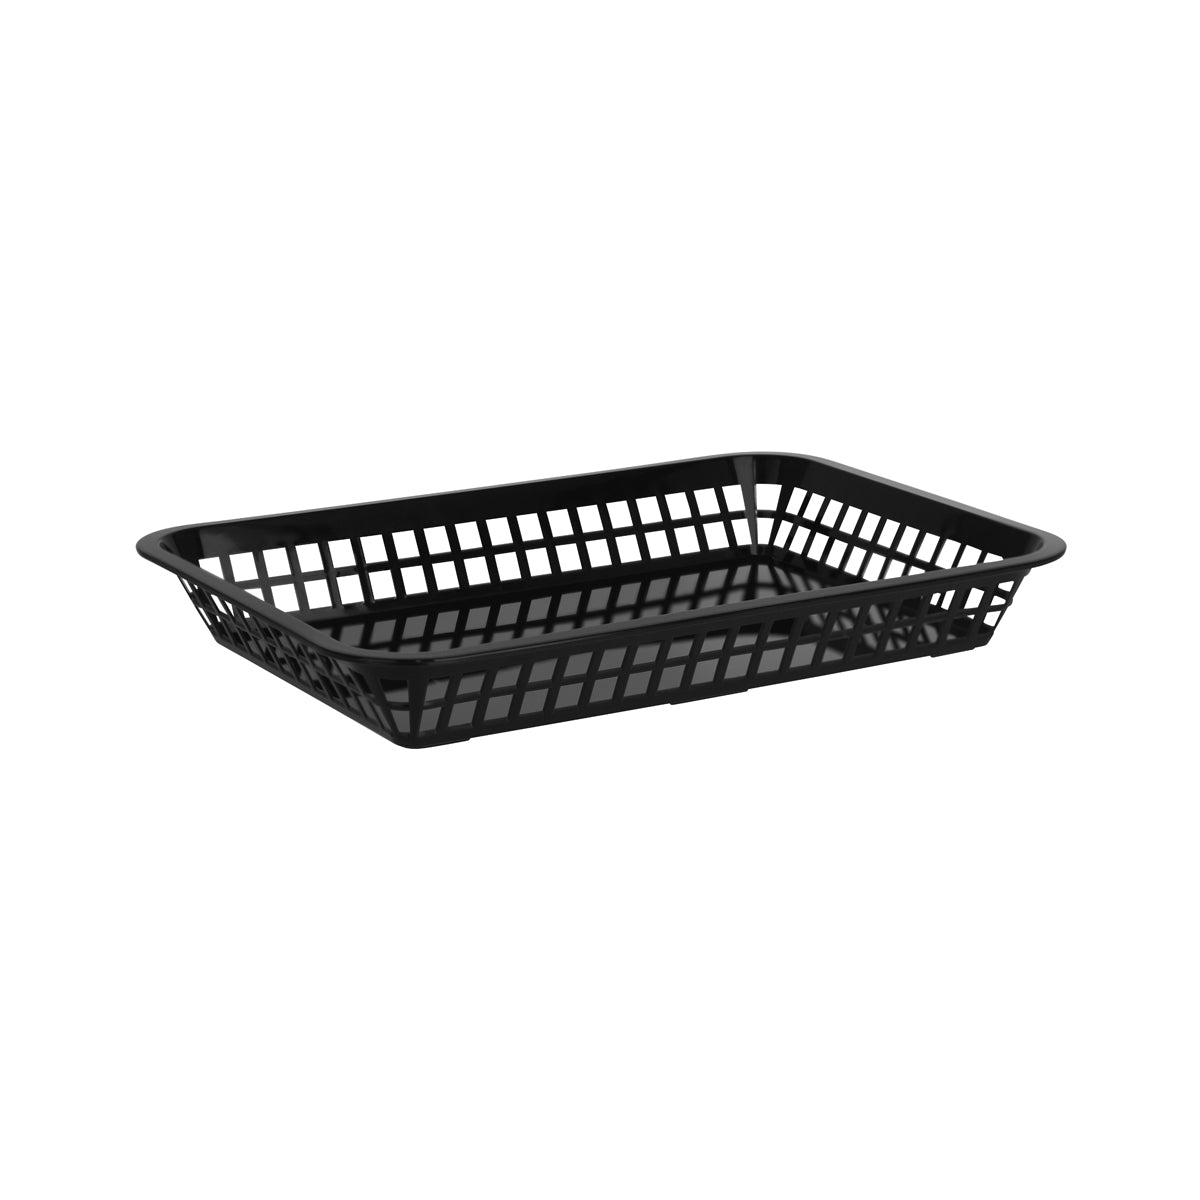 78699 Chef Inox Coney Island Rectangular Basket Plastic Black 300x215mm Tomkin Australia Hospitality Supplies